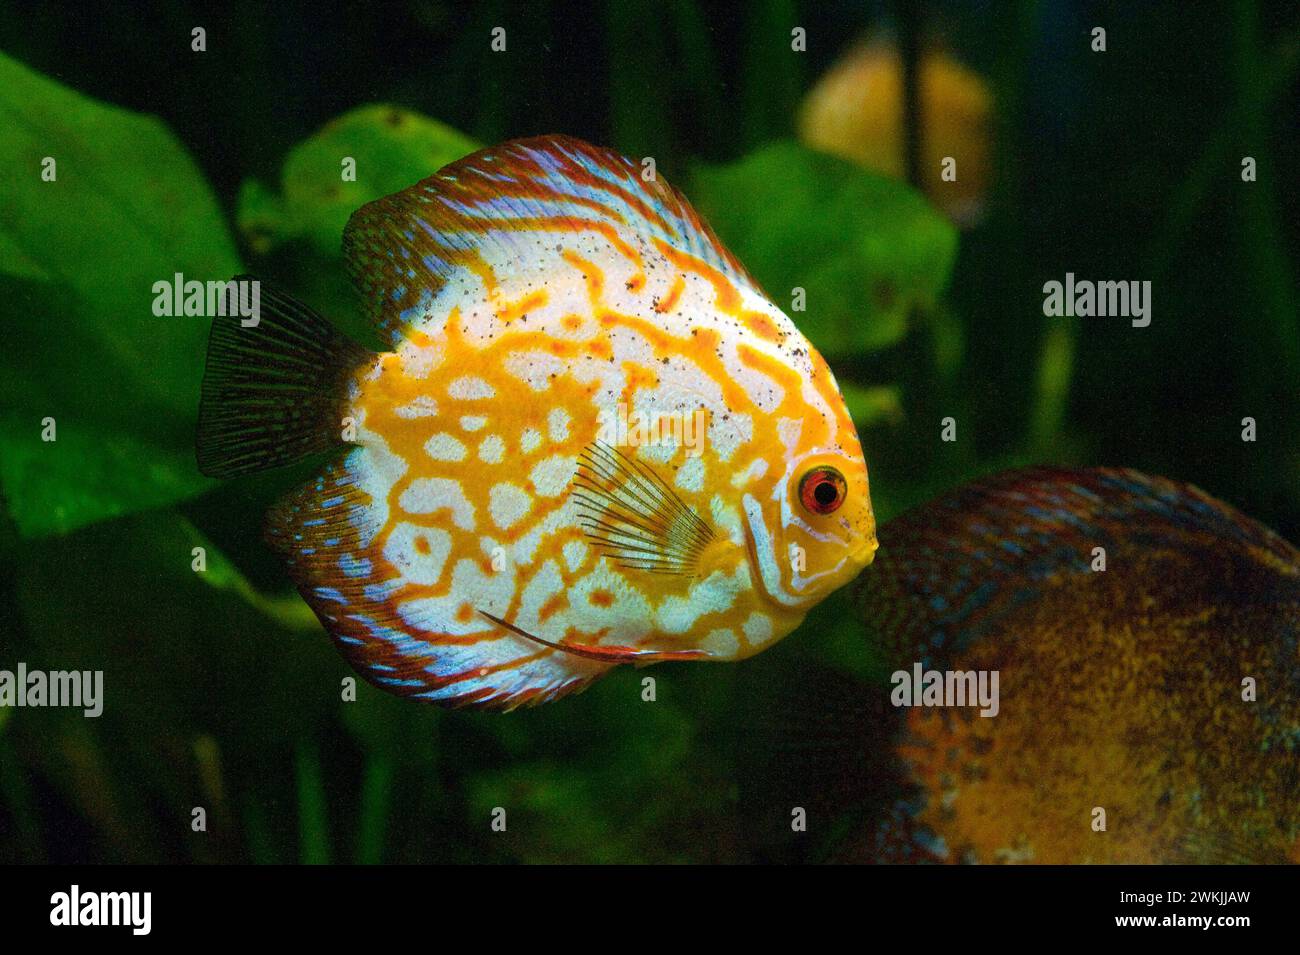 Discus (Symphysodon aequifasciatus axelrodi) is a fresh water fish native to Amazon basin. Stock Photo